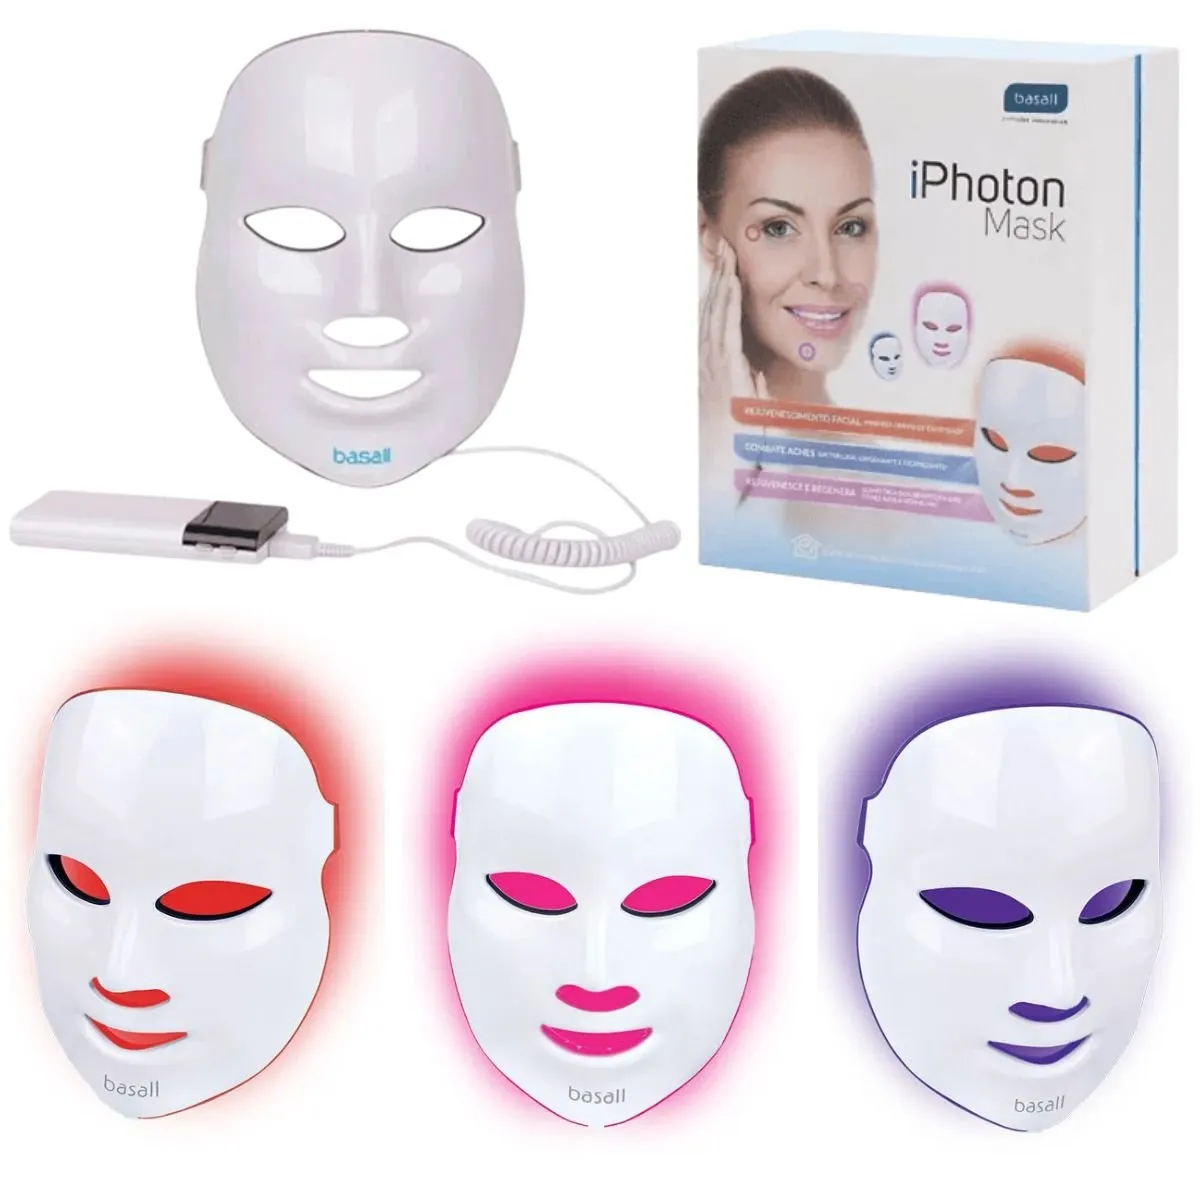 IPhoton Mask Mascara de Fototerapia Basall | HS Med